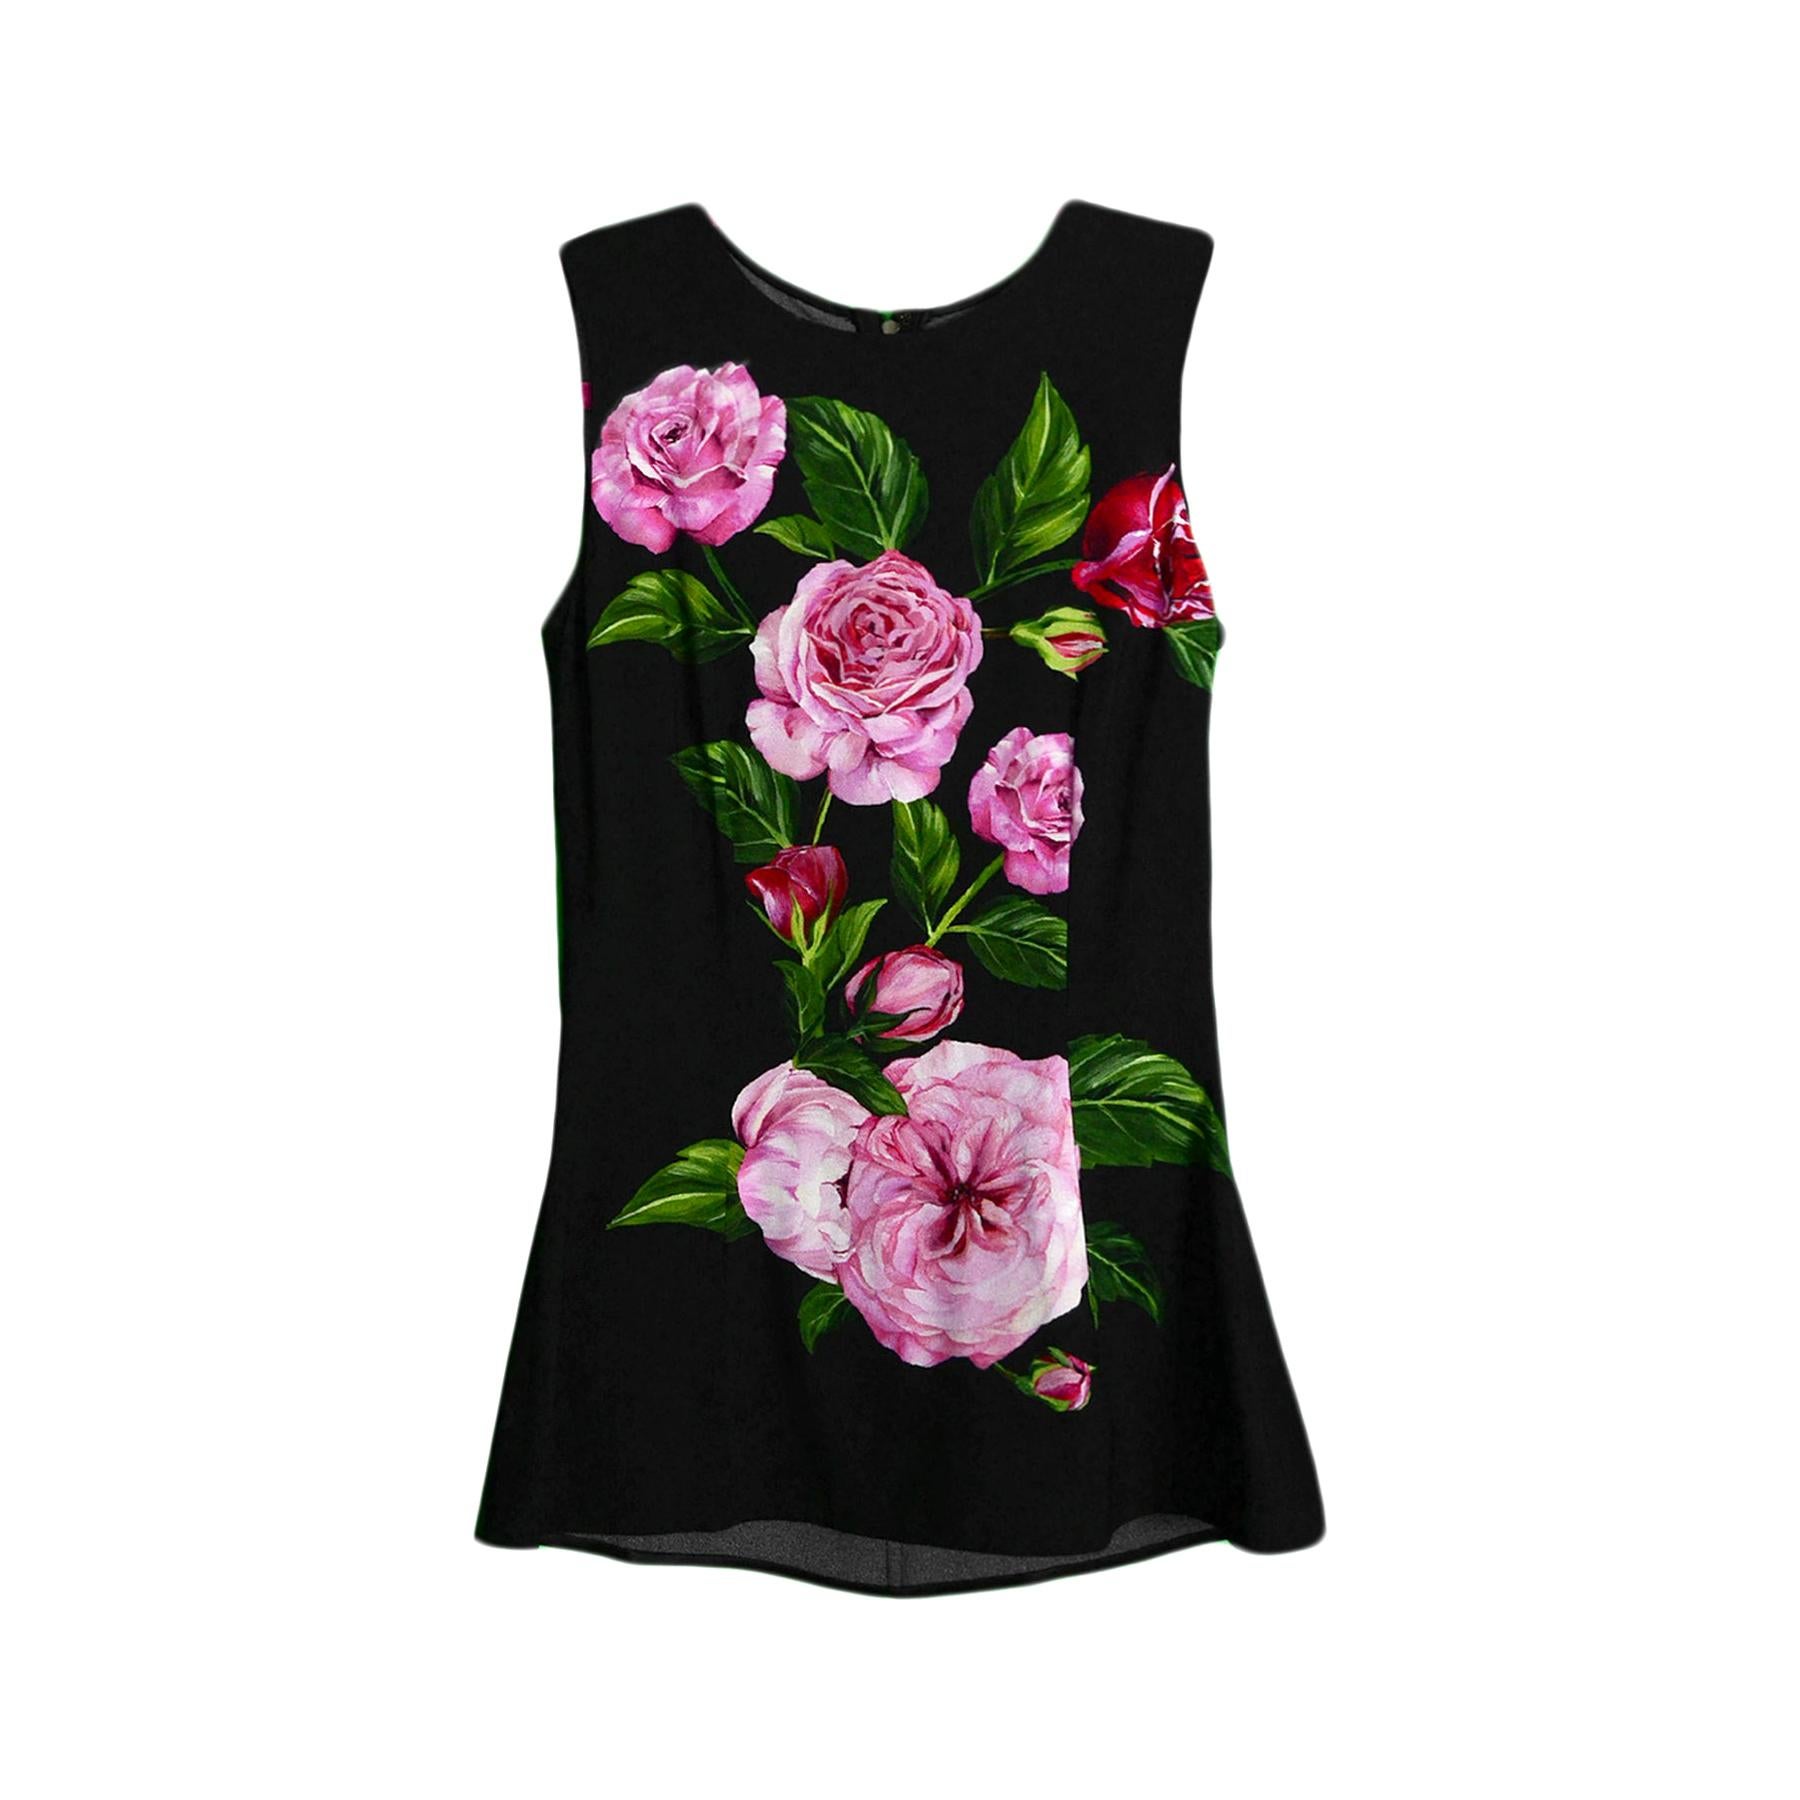 Dolce & Gabbana Black Sleeveless Top w/ Rose Print sz IT 36